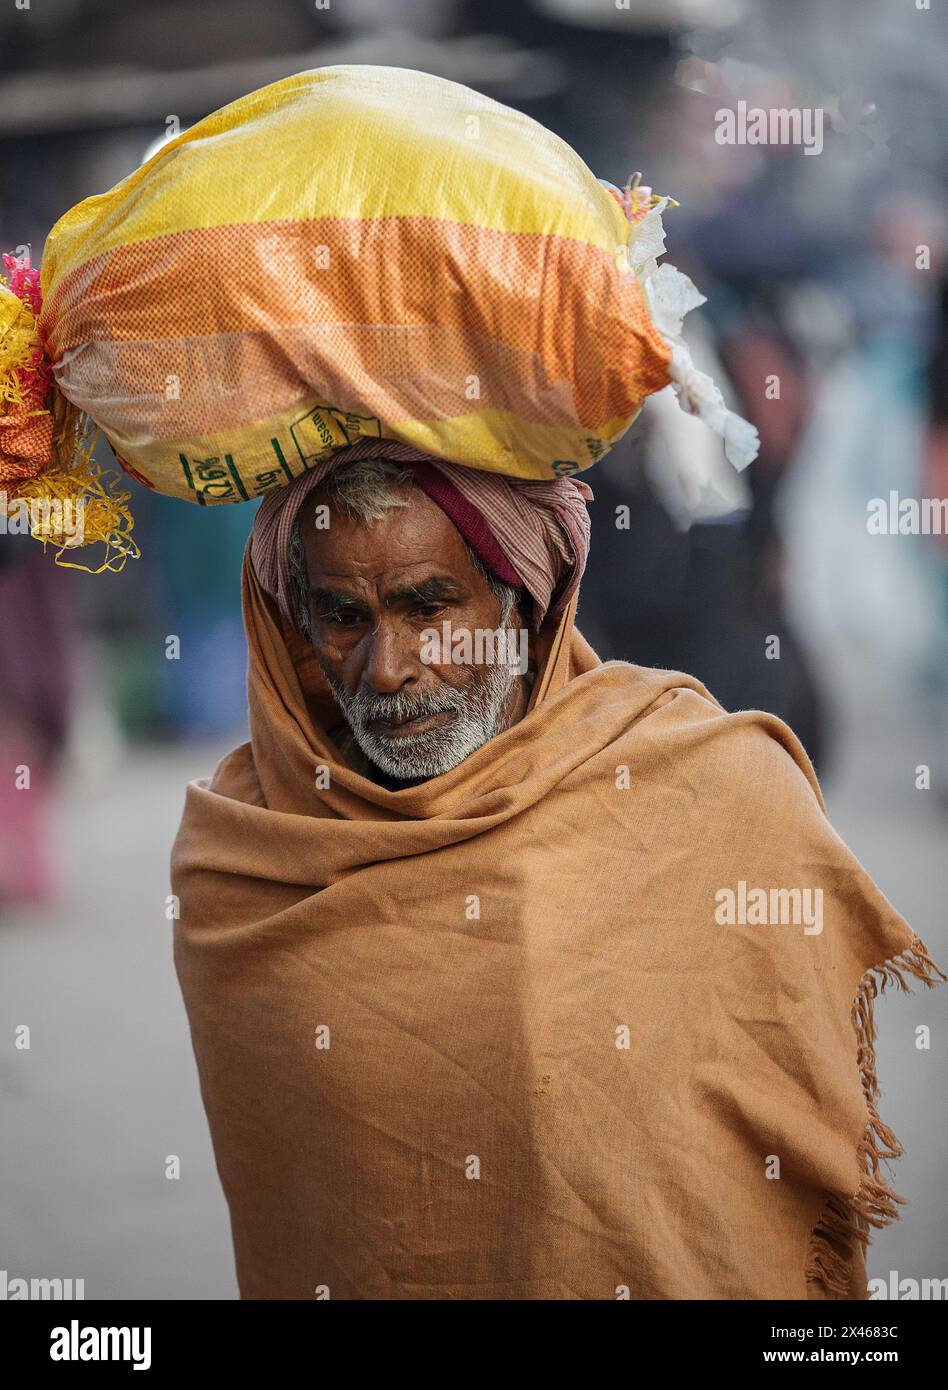 Pilgrim walking with belongings in a sack on his head in Varanasi, India. Stock Photo